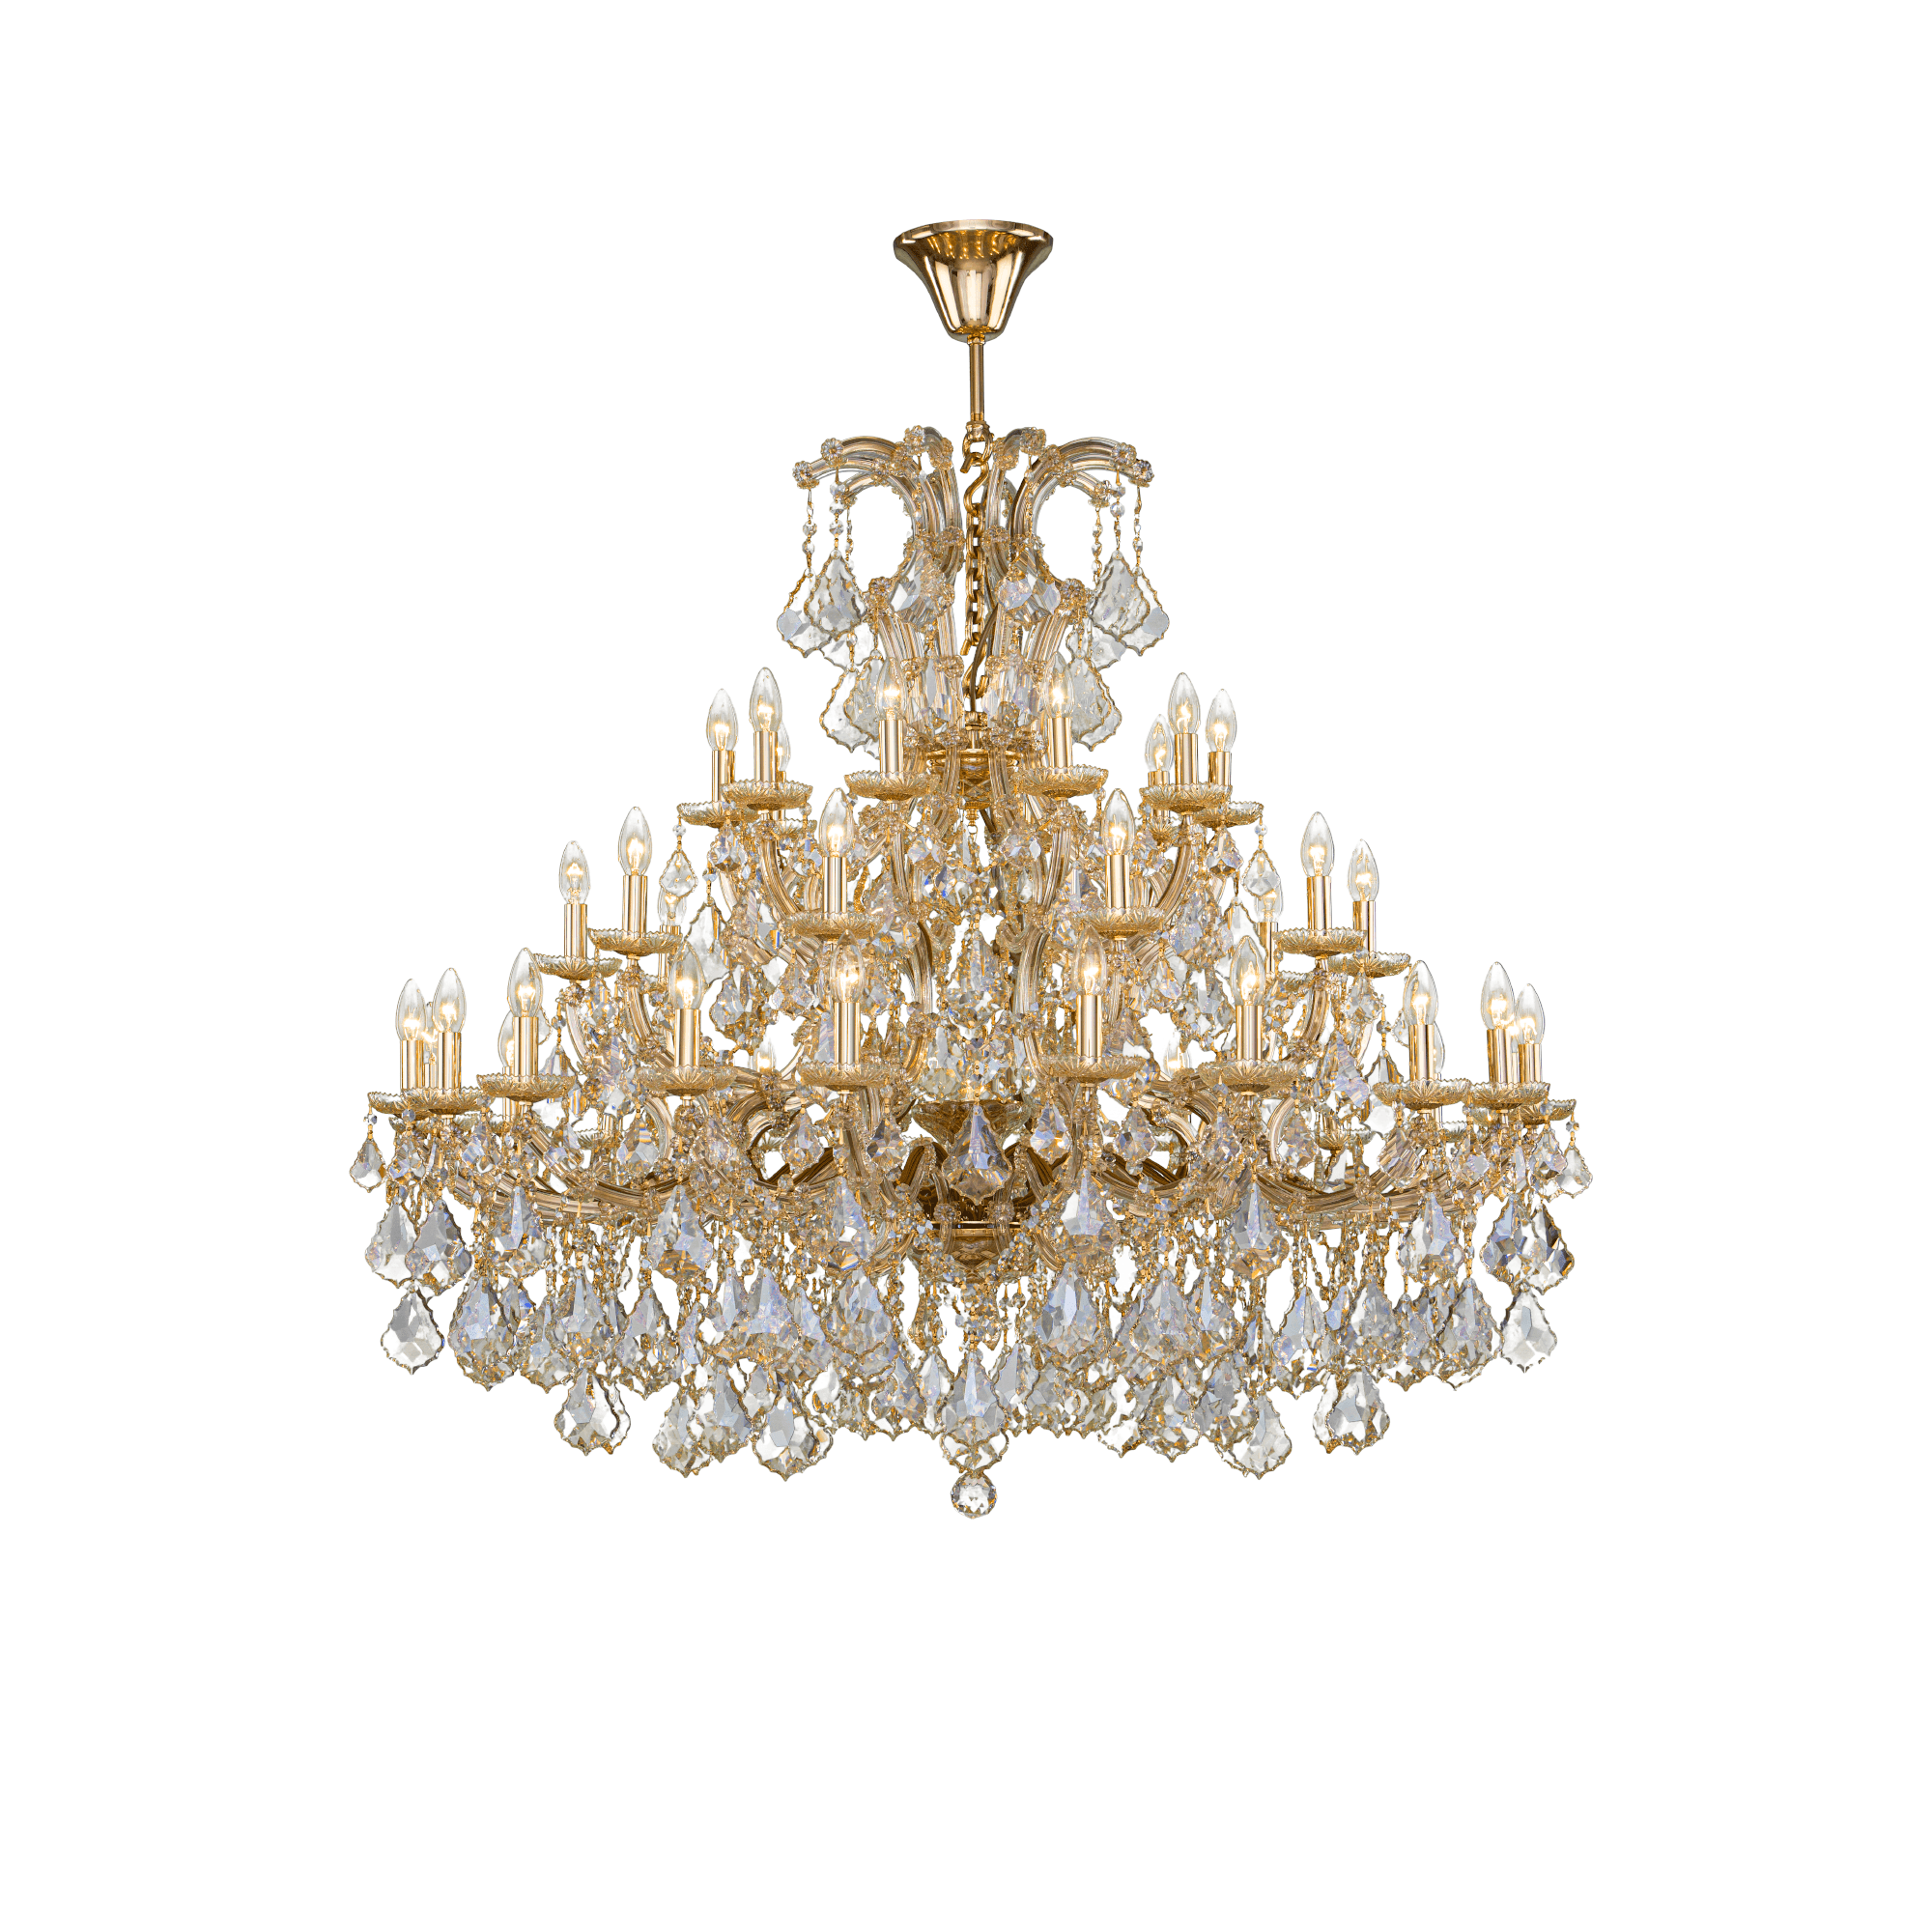 Asfour-Crystal-Lighting-Maria-Theresa-Collection-Maria-Theresa-Chandelier-41-Bulbs-Gold